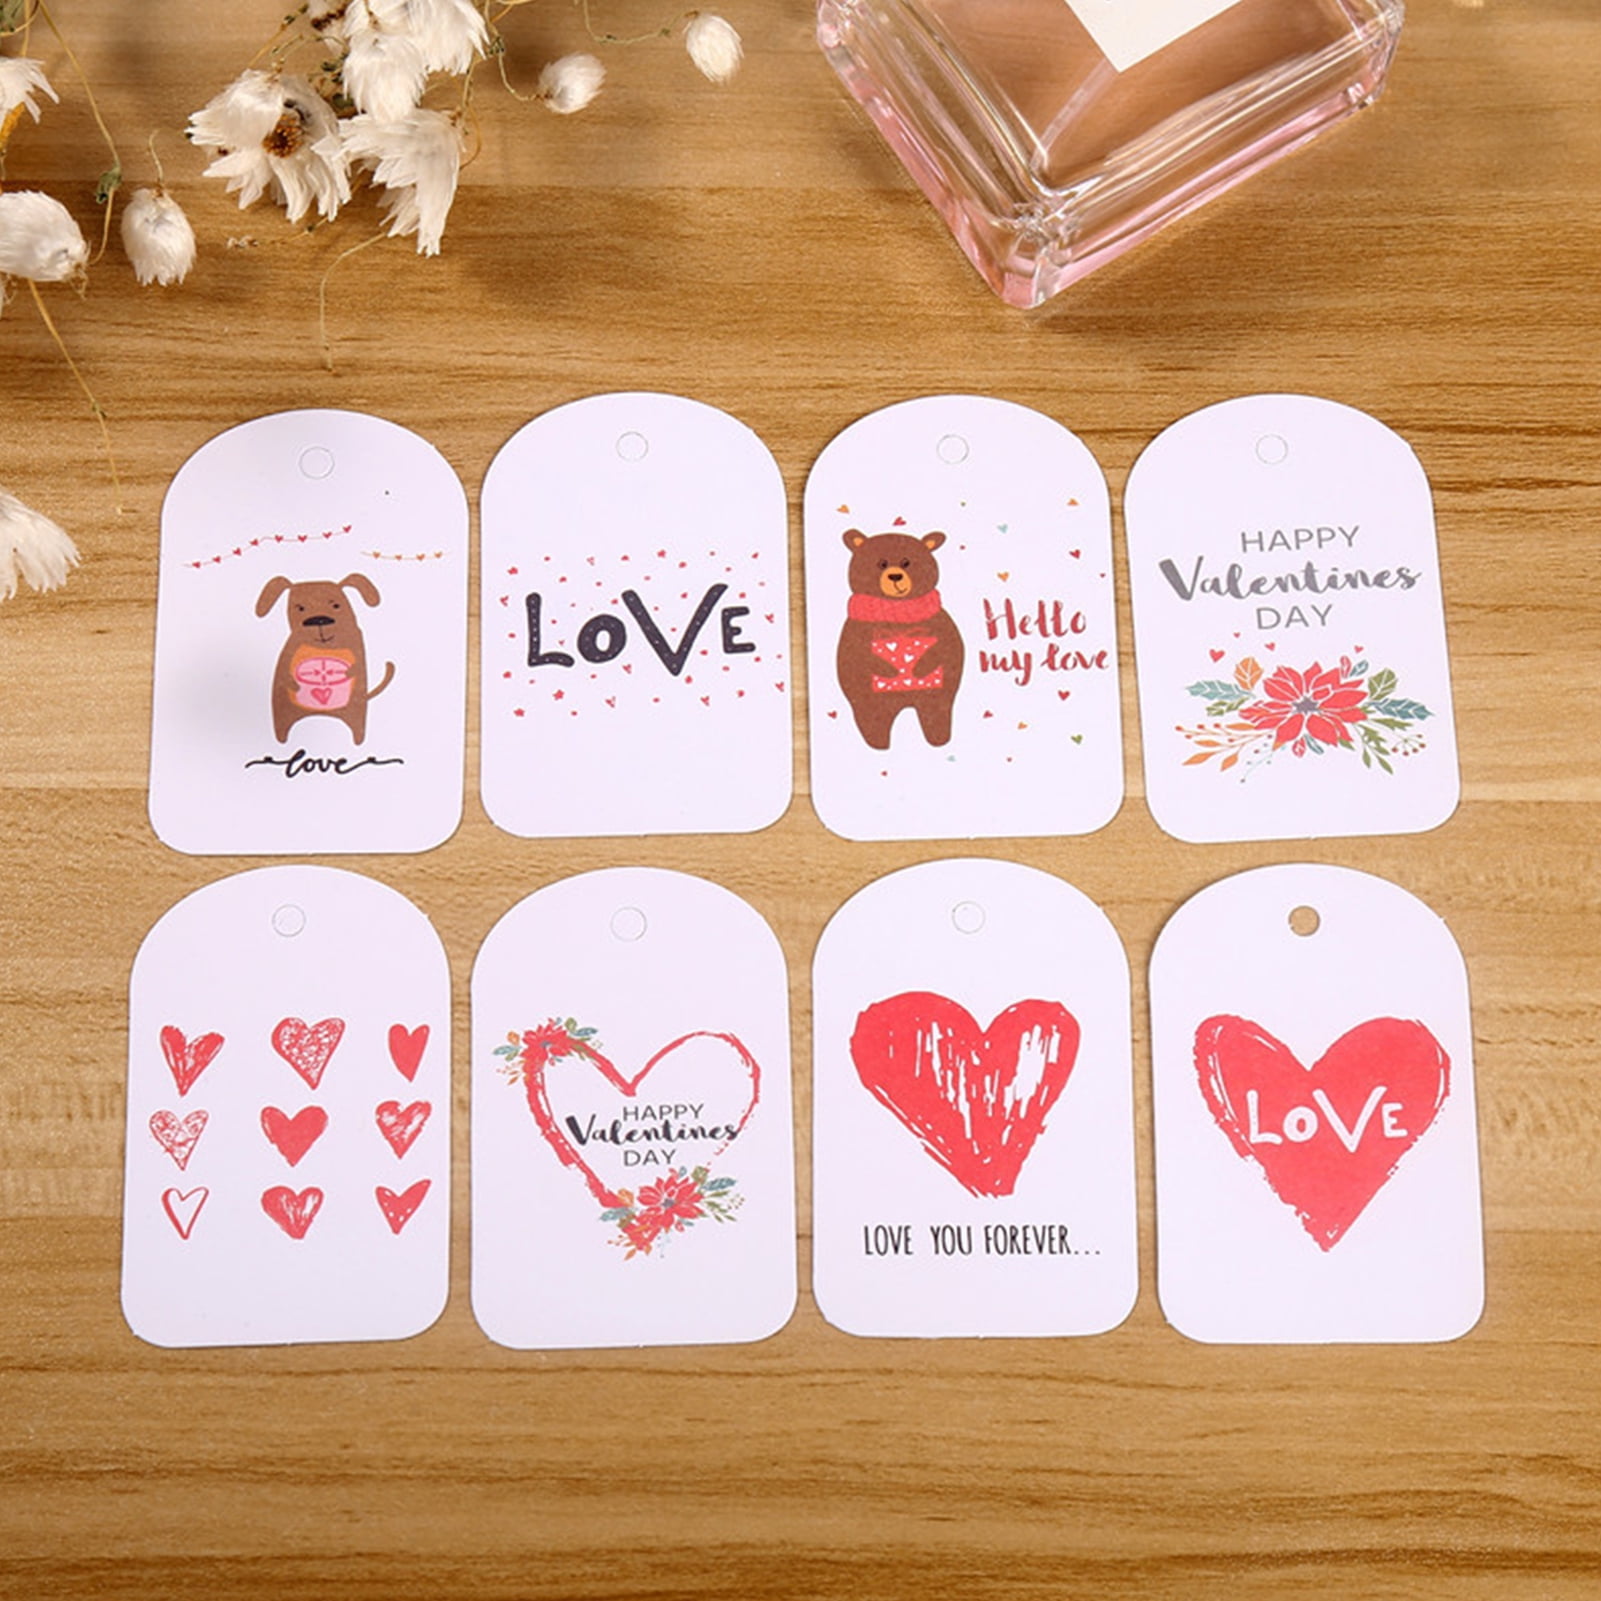 10-100pcs Flamingo Printed Paper Tags DIY Gift Tag Labels Cards Hanging Wedding 